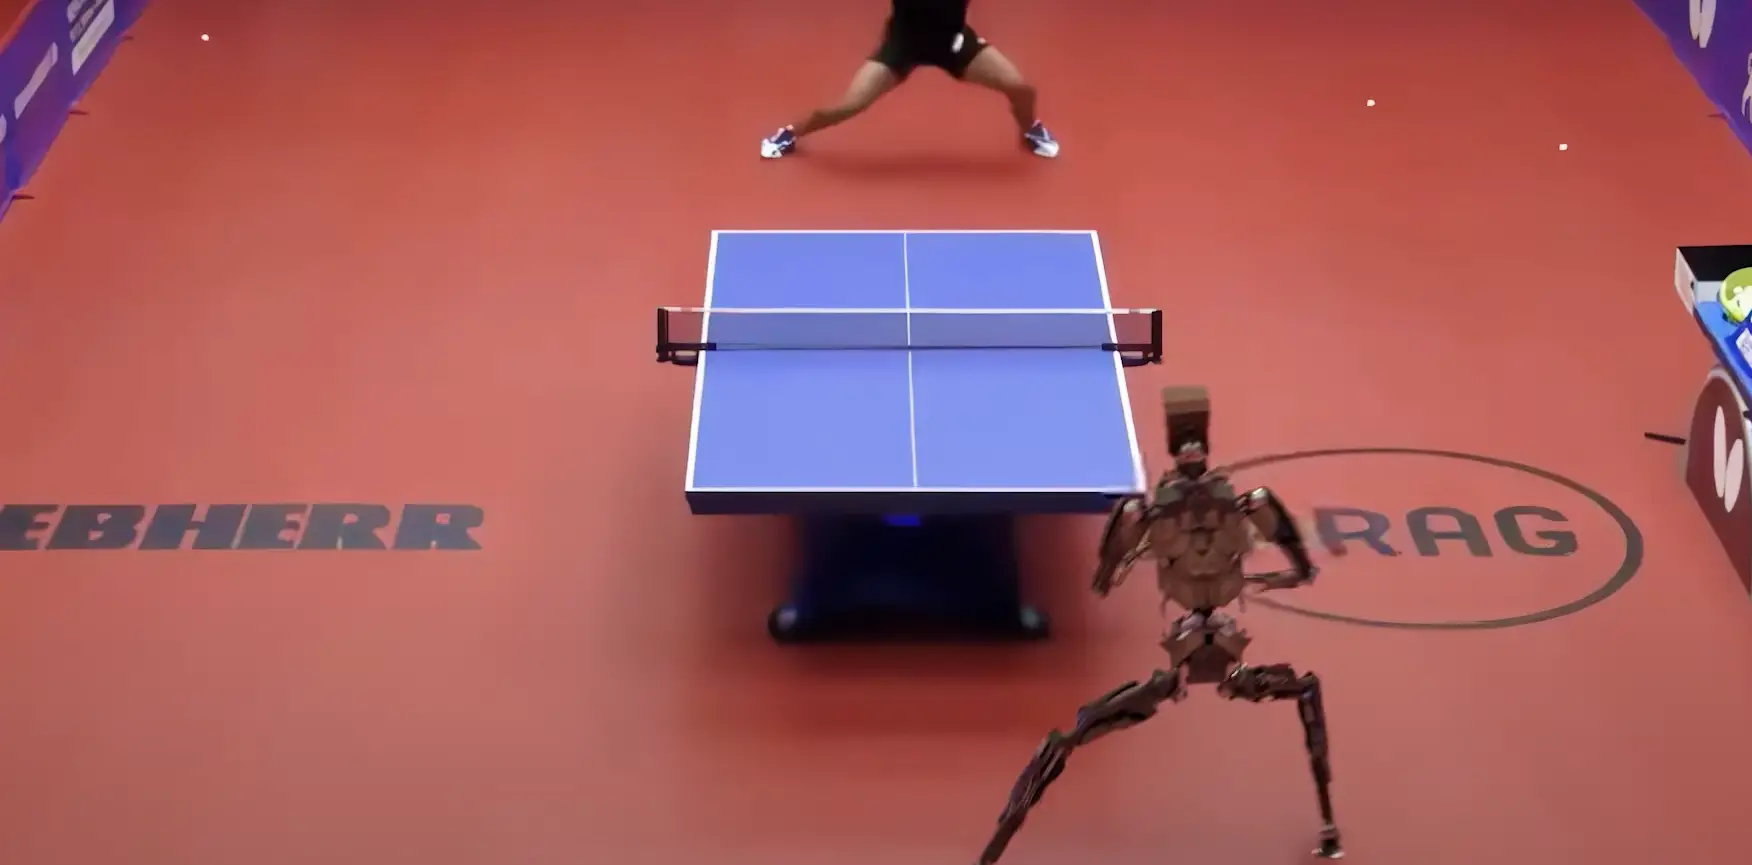 How to make ping pong robot